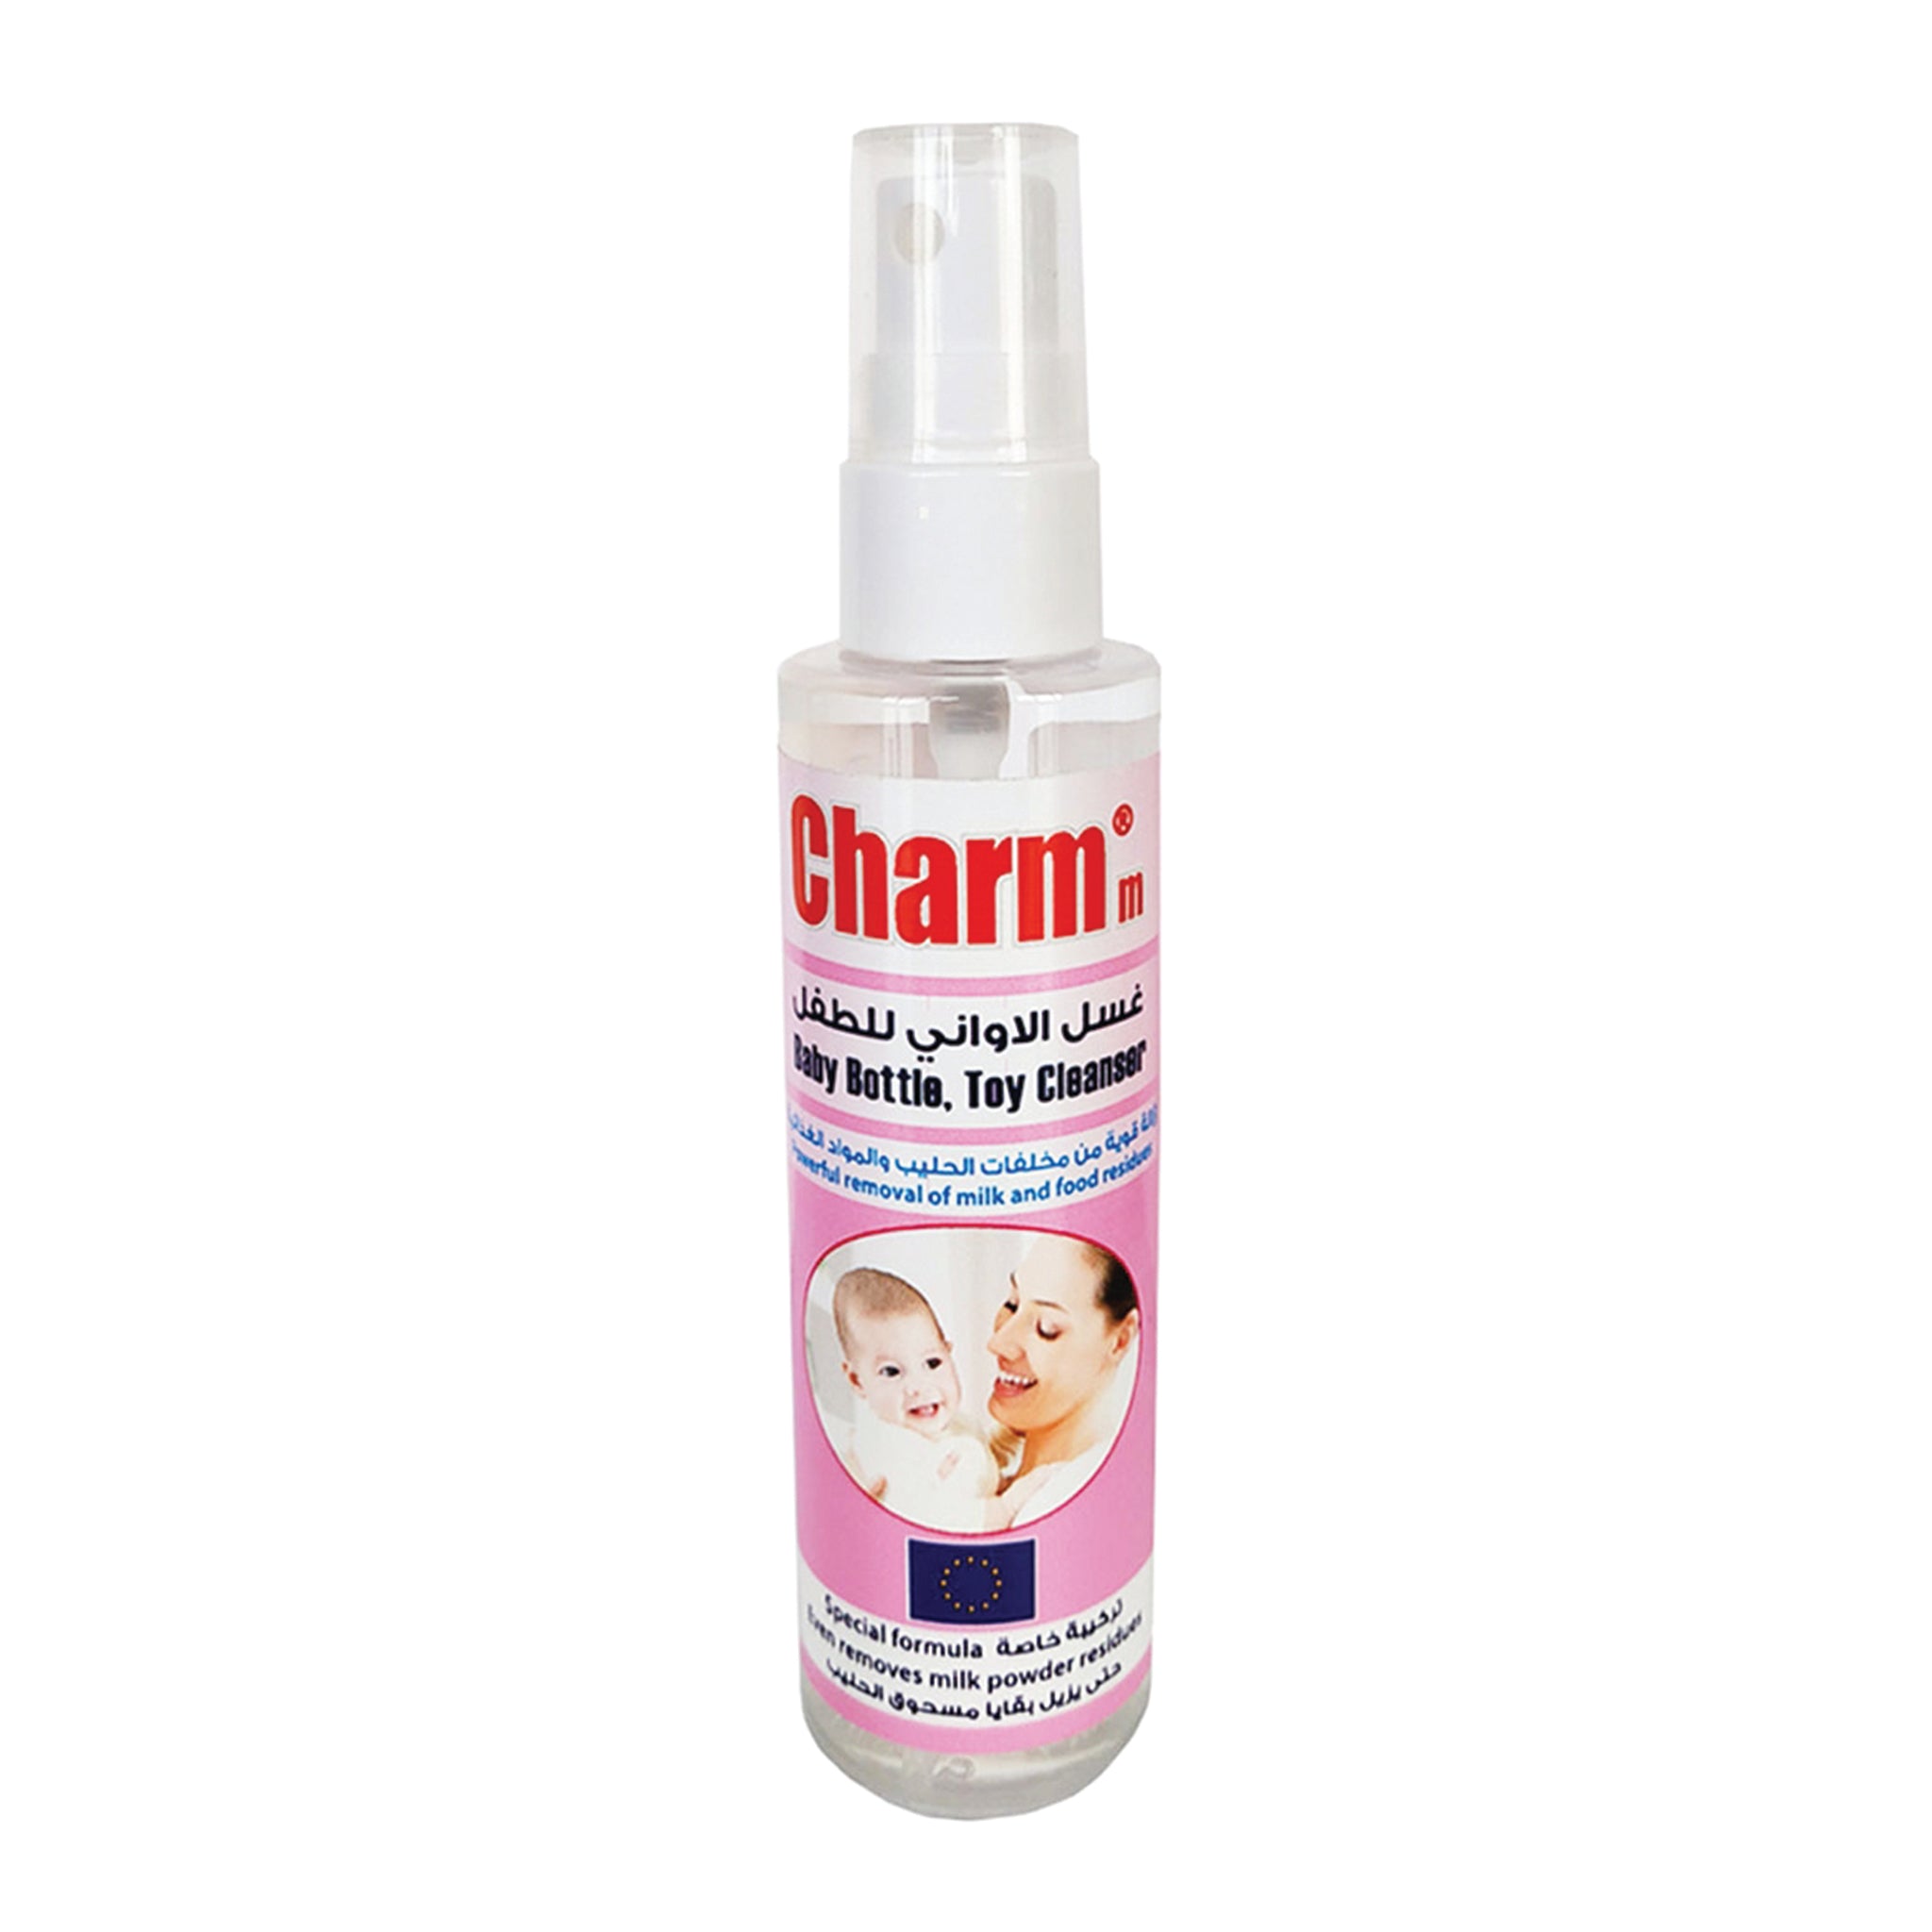 Charmm Baby Bottle, Toy Cleanser 75ML